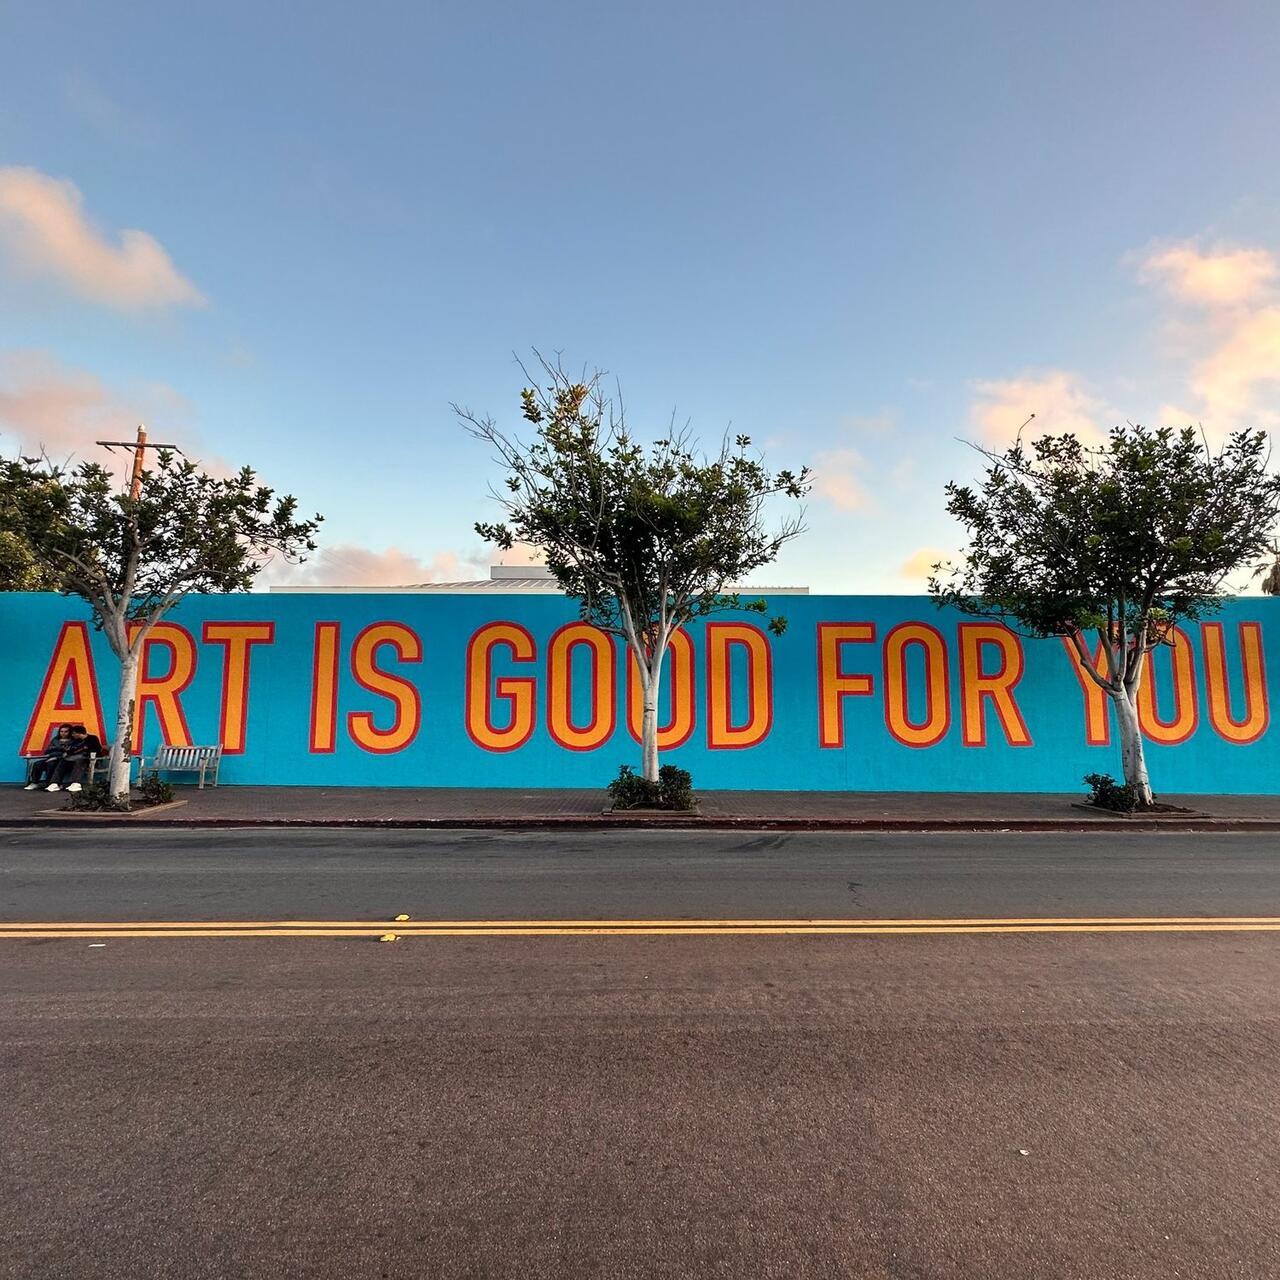 Michael Mercil image from artist talk, street art "art is good for you"